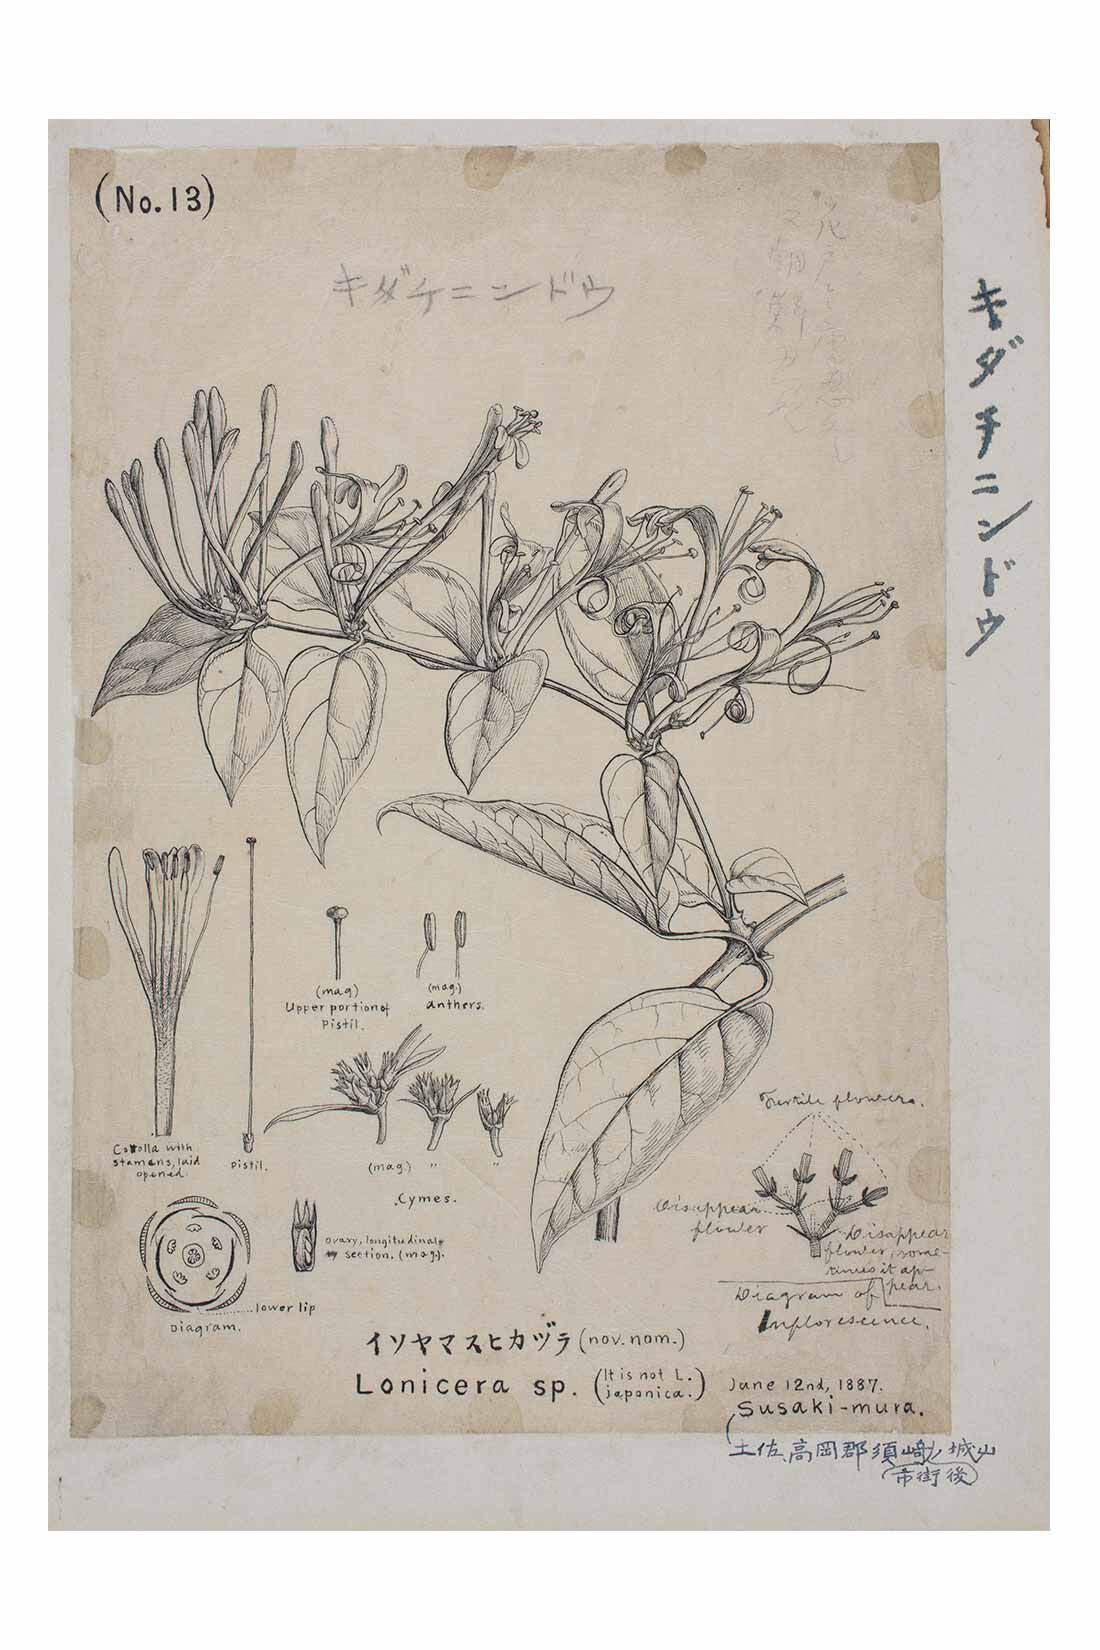 IEDIT|牧野植物園×IEDIT[イディット]コラボ 牧野博士の描いたキダチニンドウのトートバッグ〈エクリュホワイト〉|1887年 明治時代に和紙に筆で描かれた「キダチニンドウ」